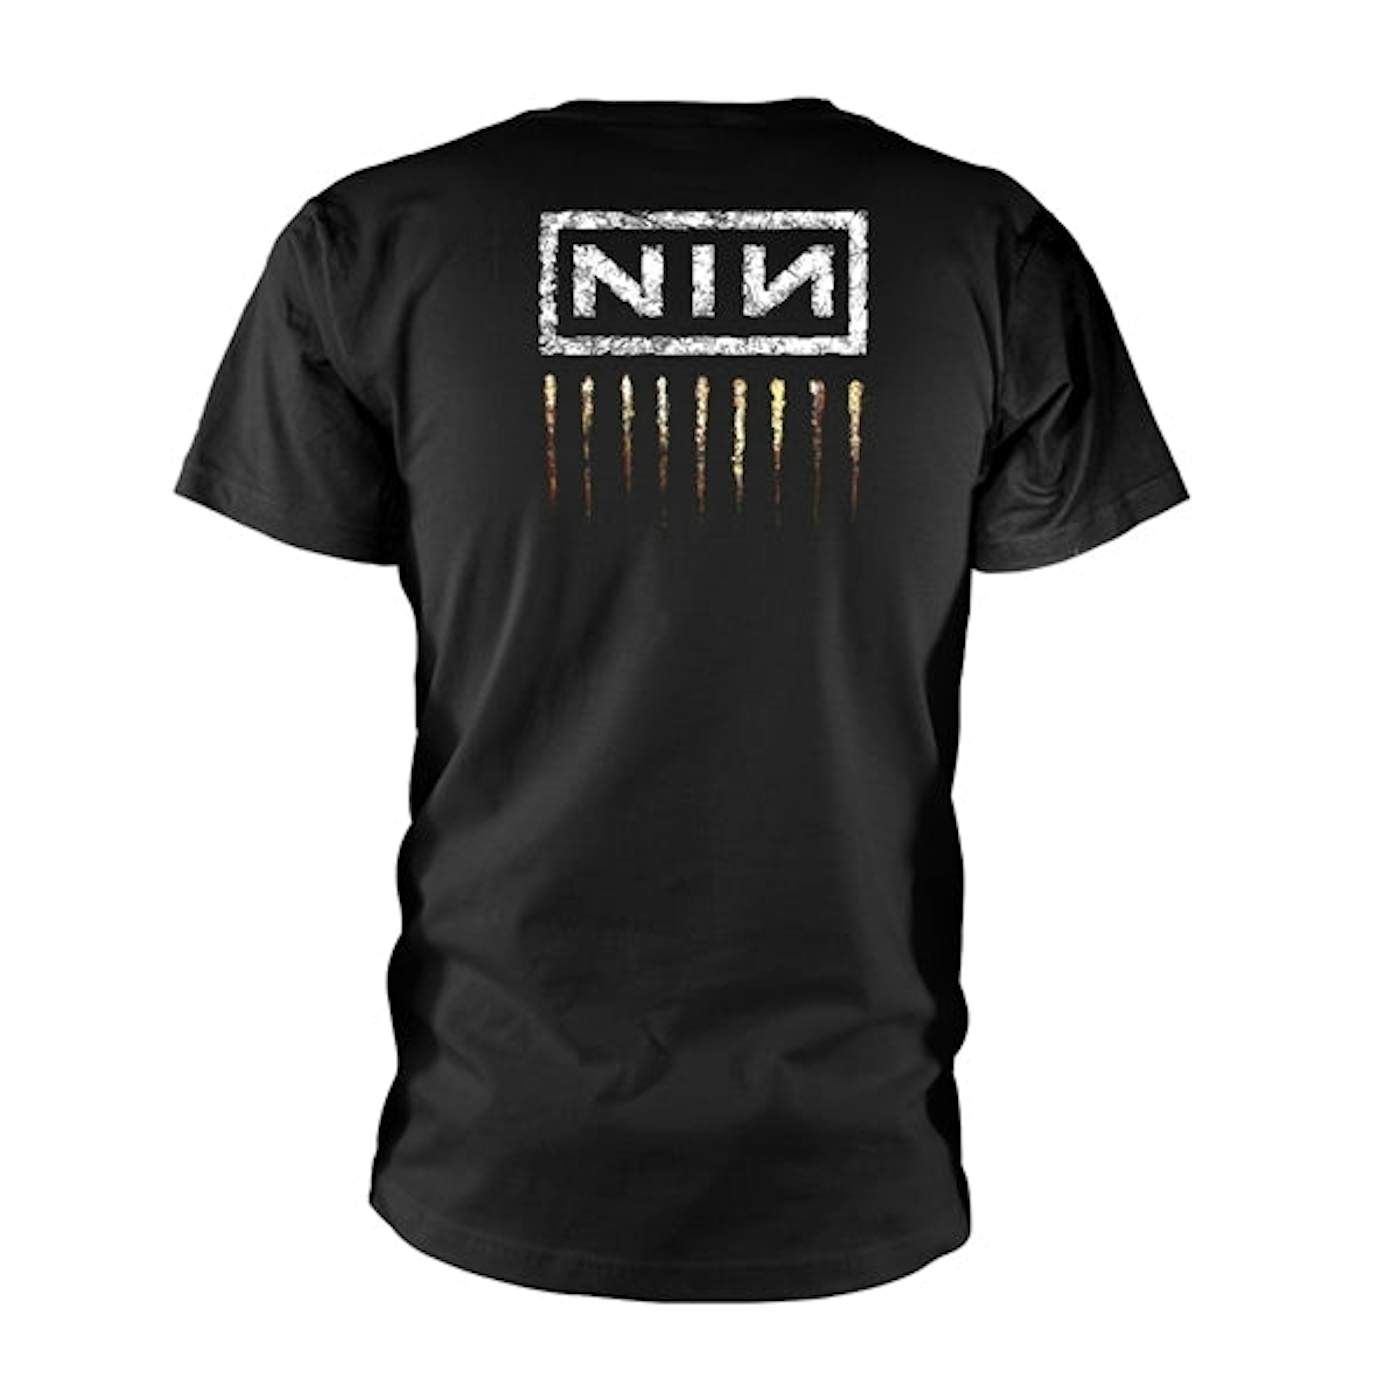 Nine Inch Nails T-Shirt - The Downward Spiral